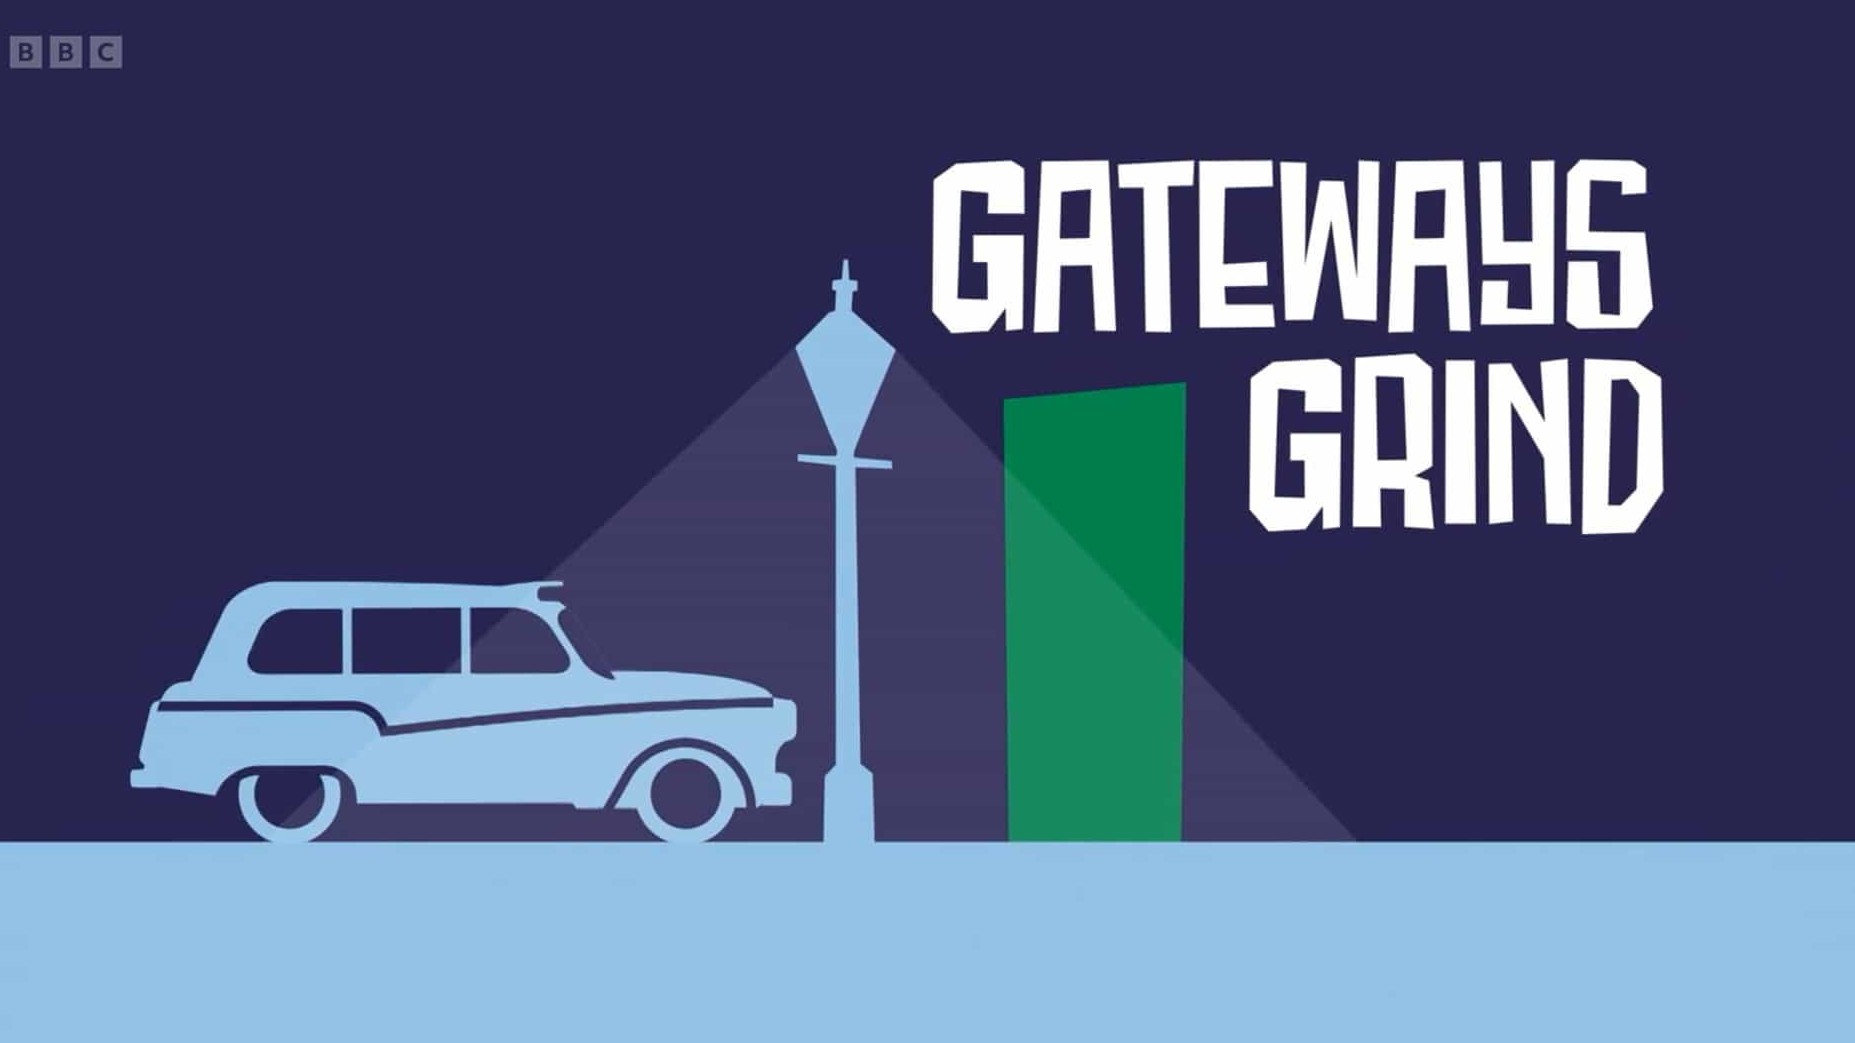 BBC纪录片《一间拉吧的往事/捷威时光 Gateways Grind 2022》全1集 英语中英双字 1080P高清网盘下载